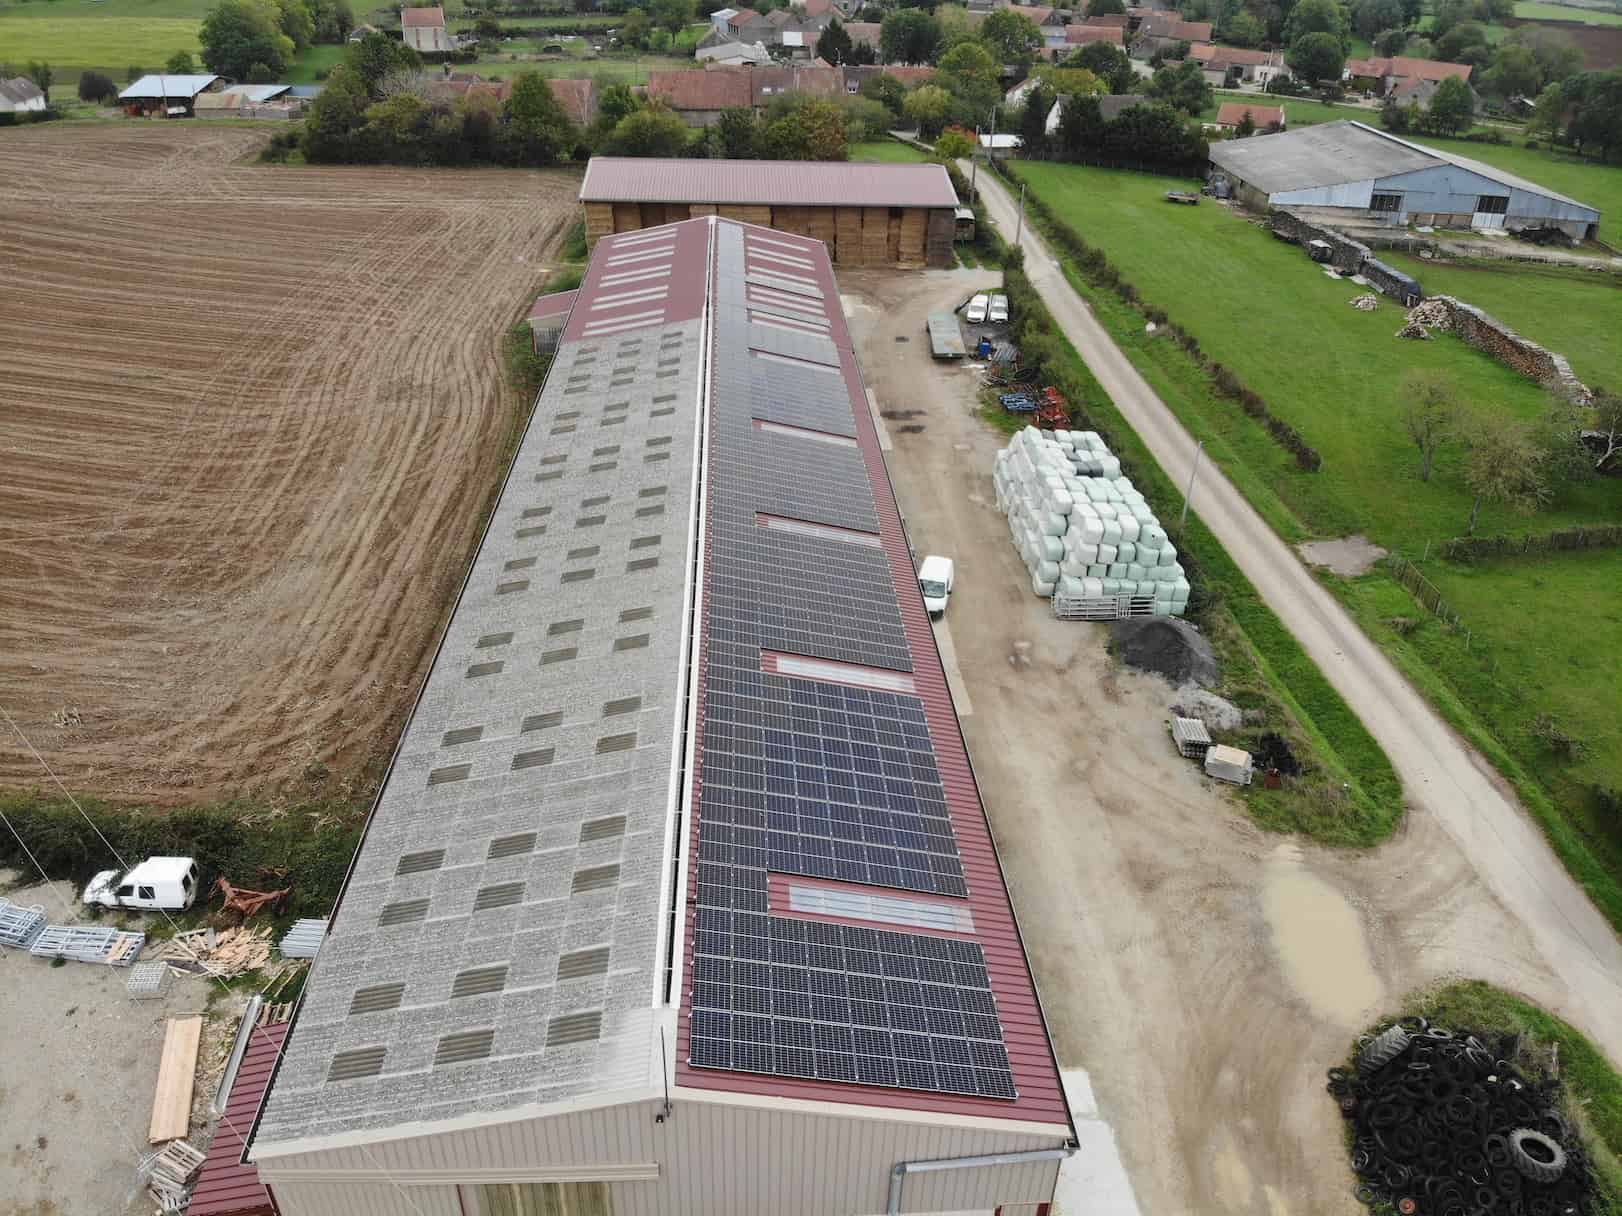 hangar agricole solaire